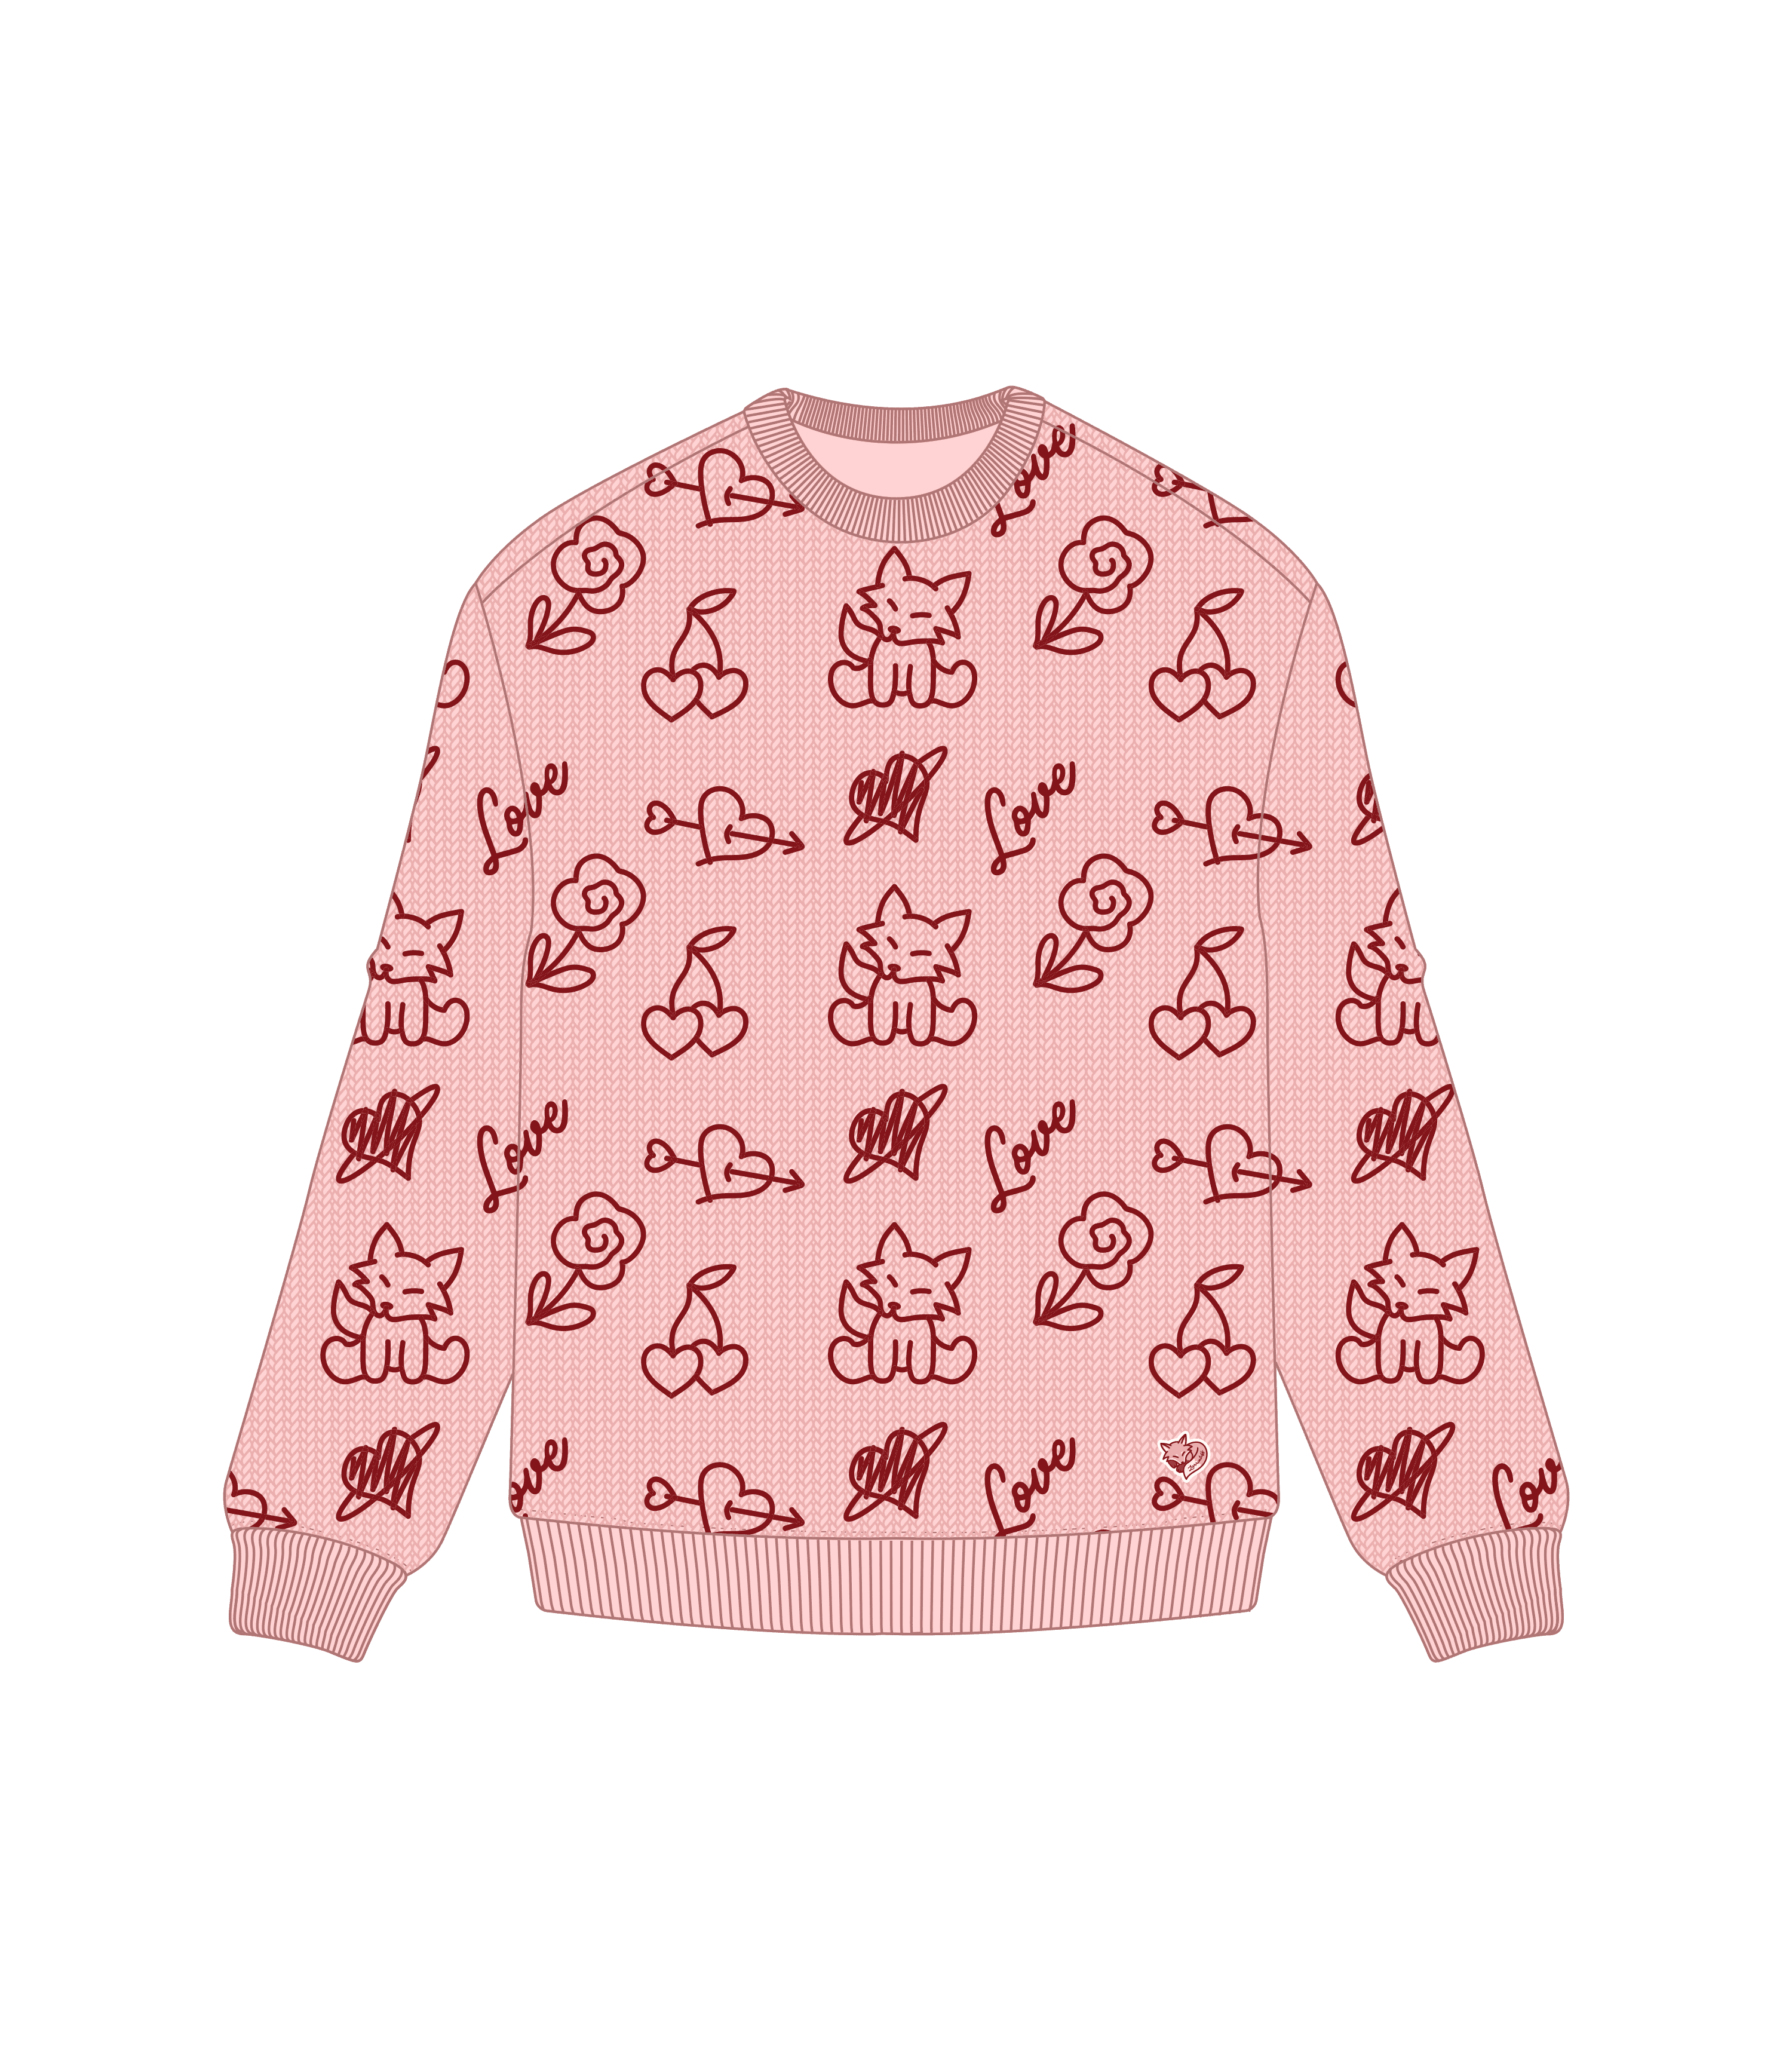 Zorro Stuff Sweater S / Pink Knite Sweater